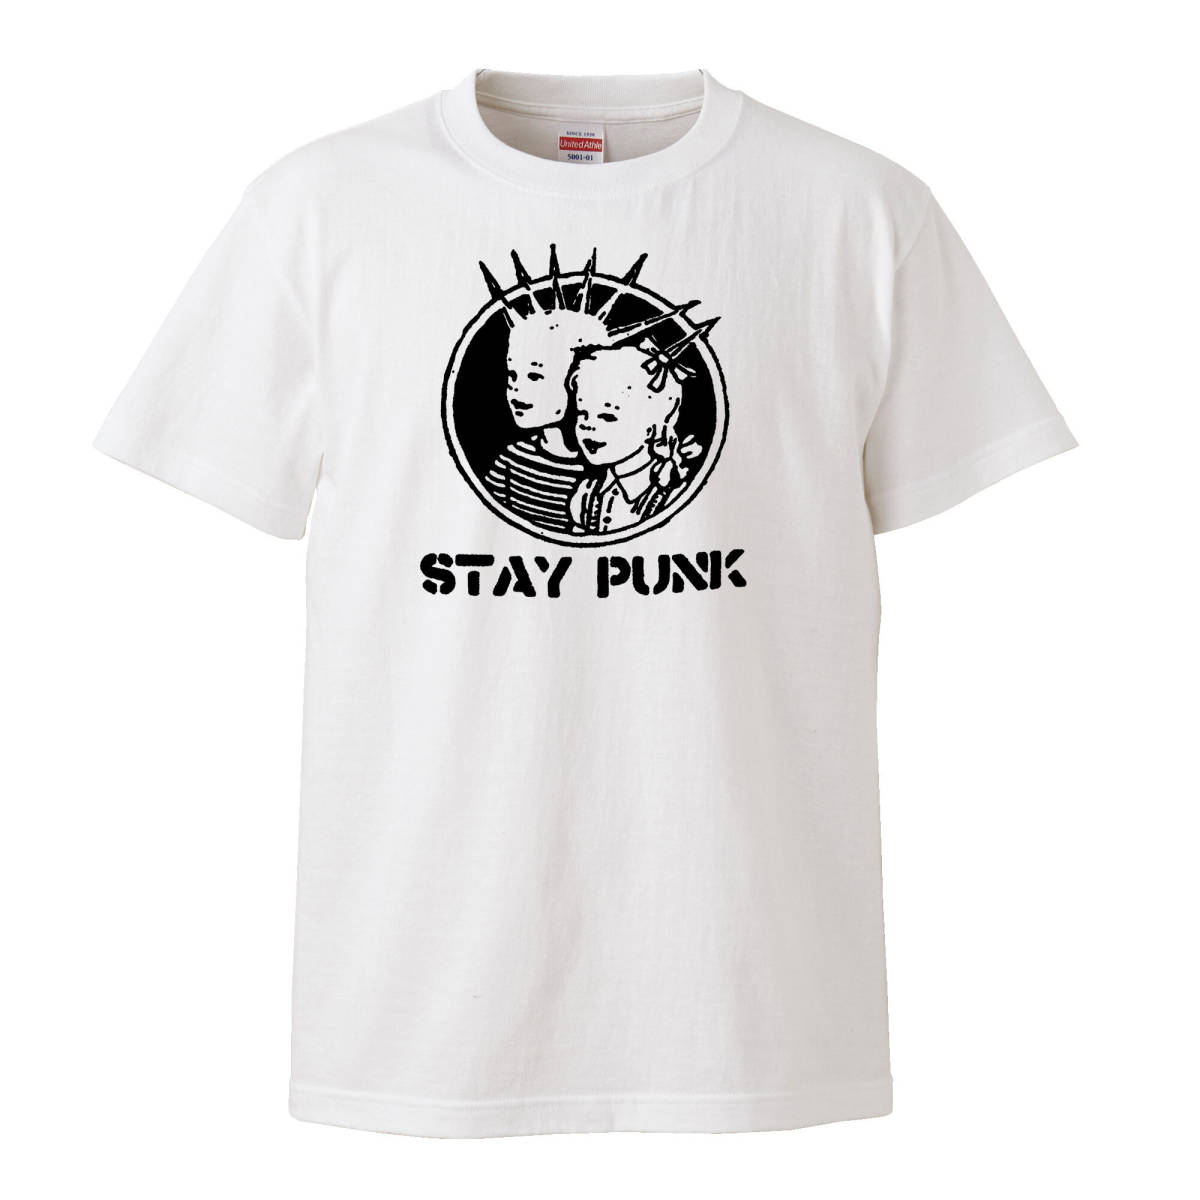 【Lサイズ Tシャツ】STAY PUNK パンク 70s LP CD レコード 甲本ヒロト バンド 7inch ハードコア_画像1